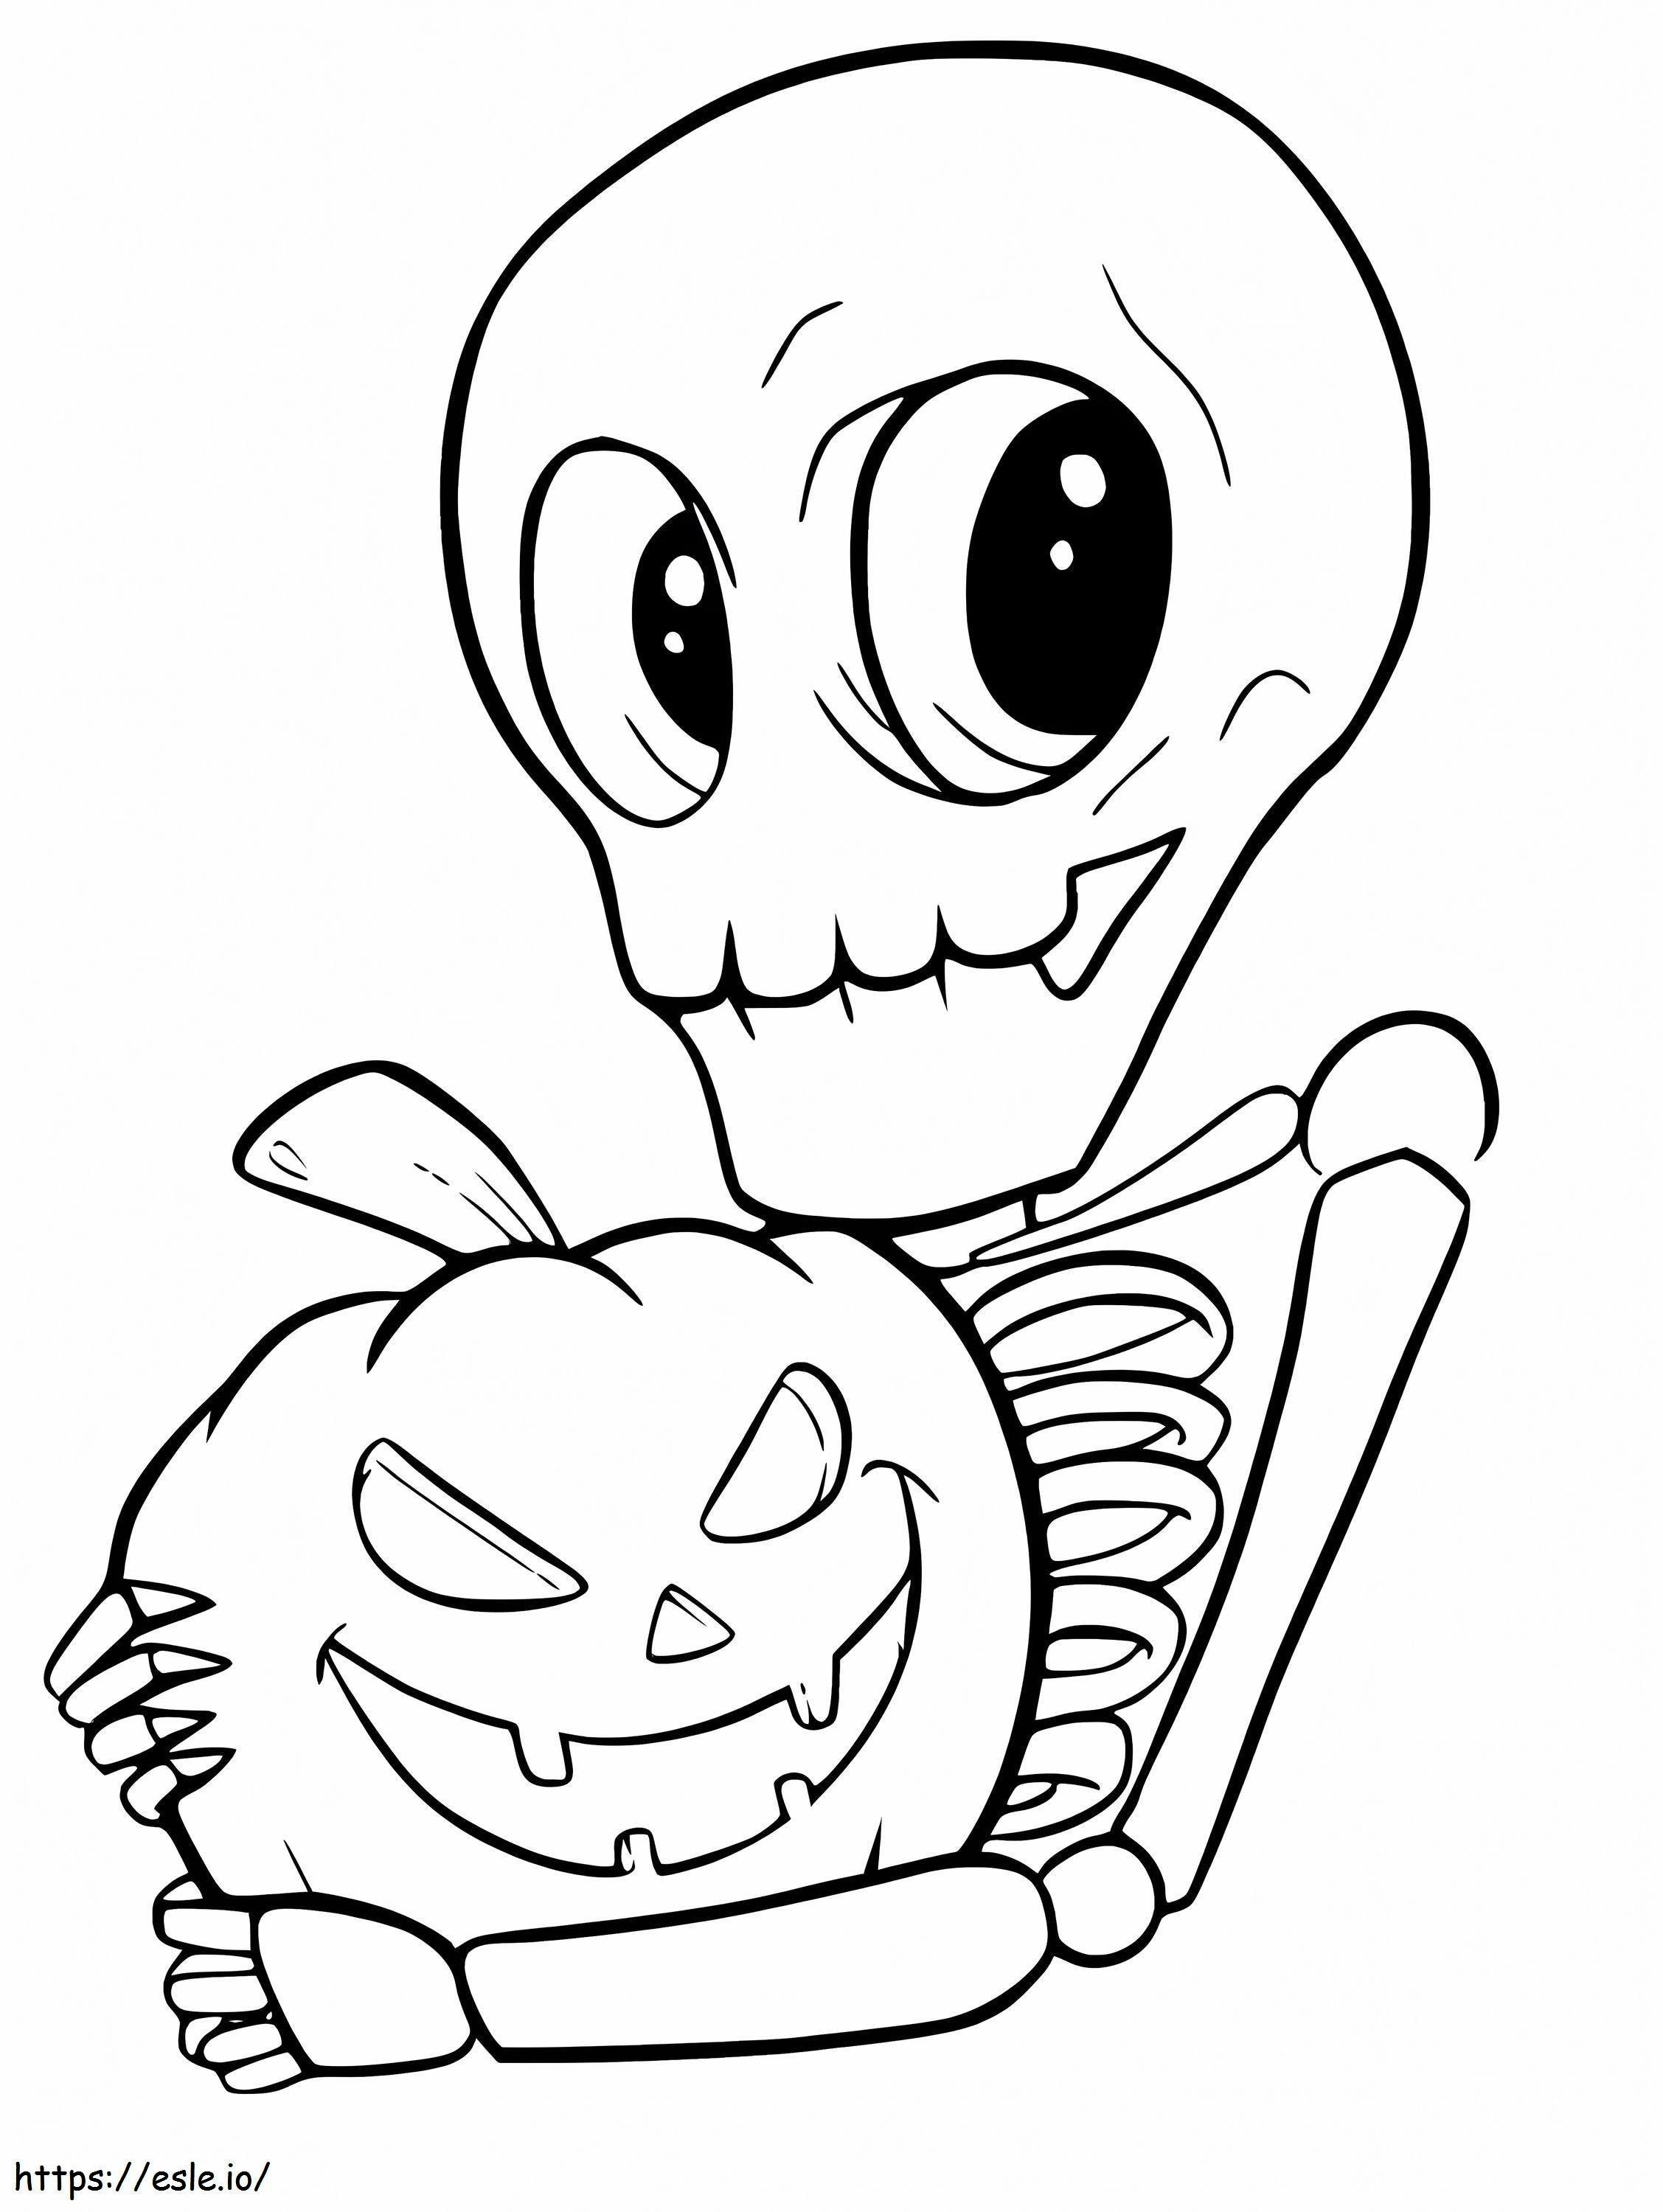 Skeleton Holding Pumpkin coloring page